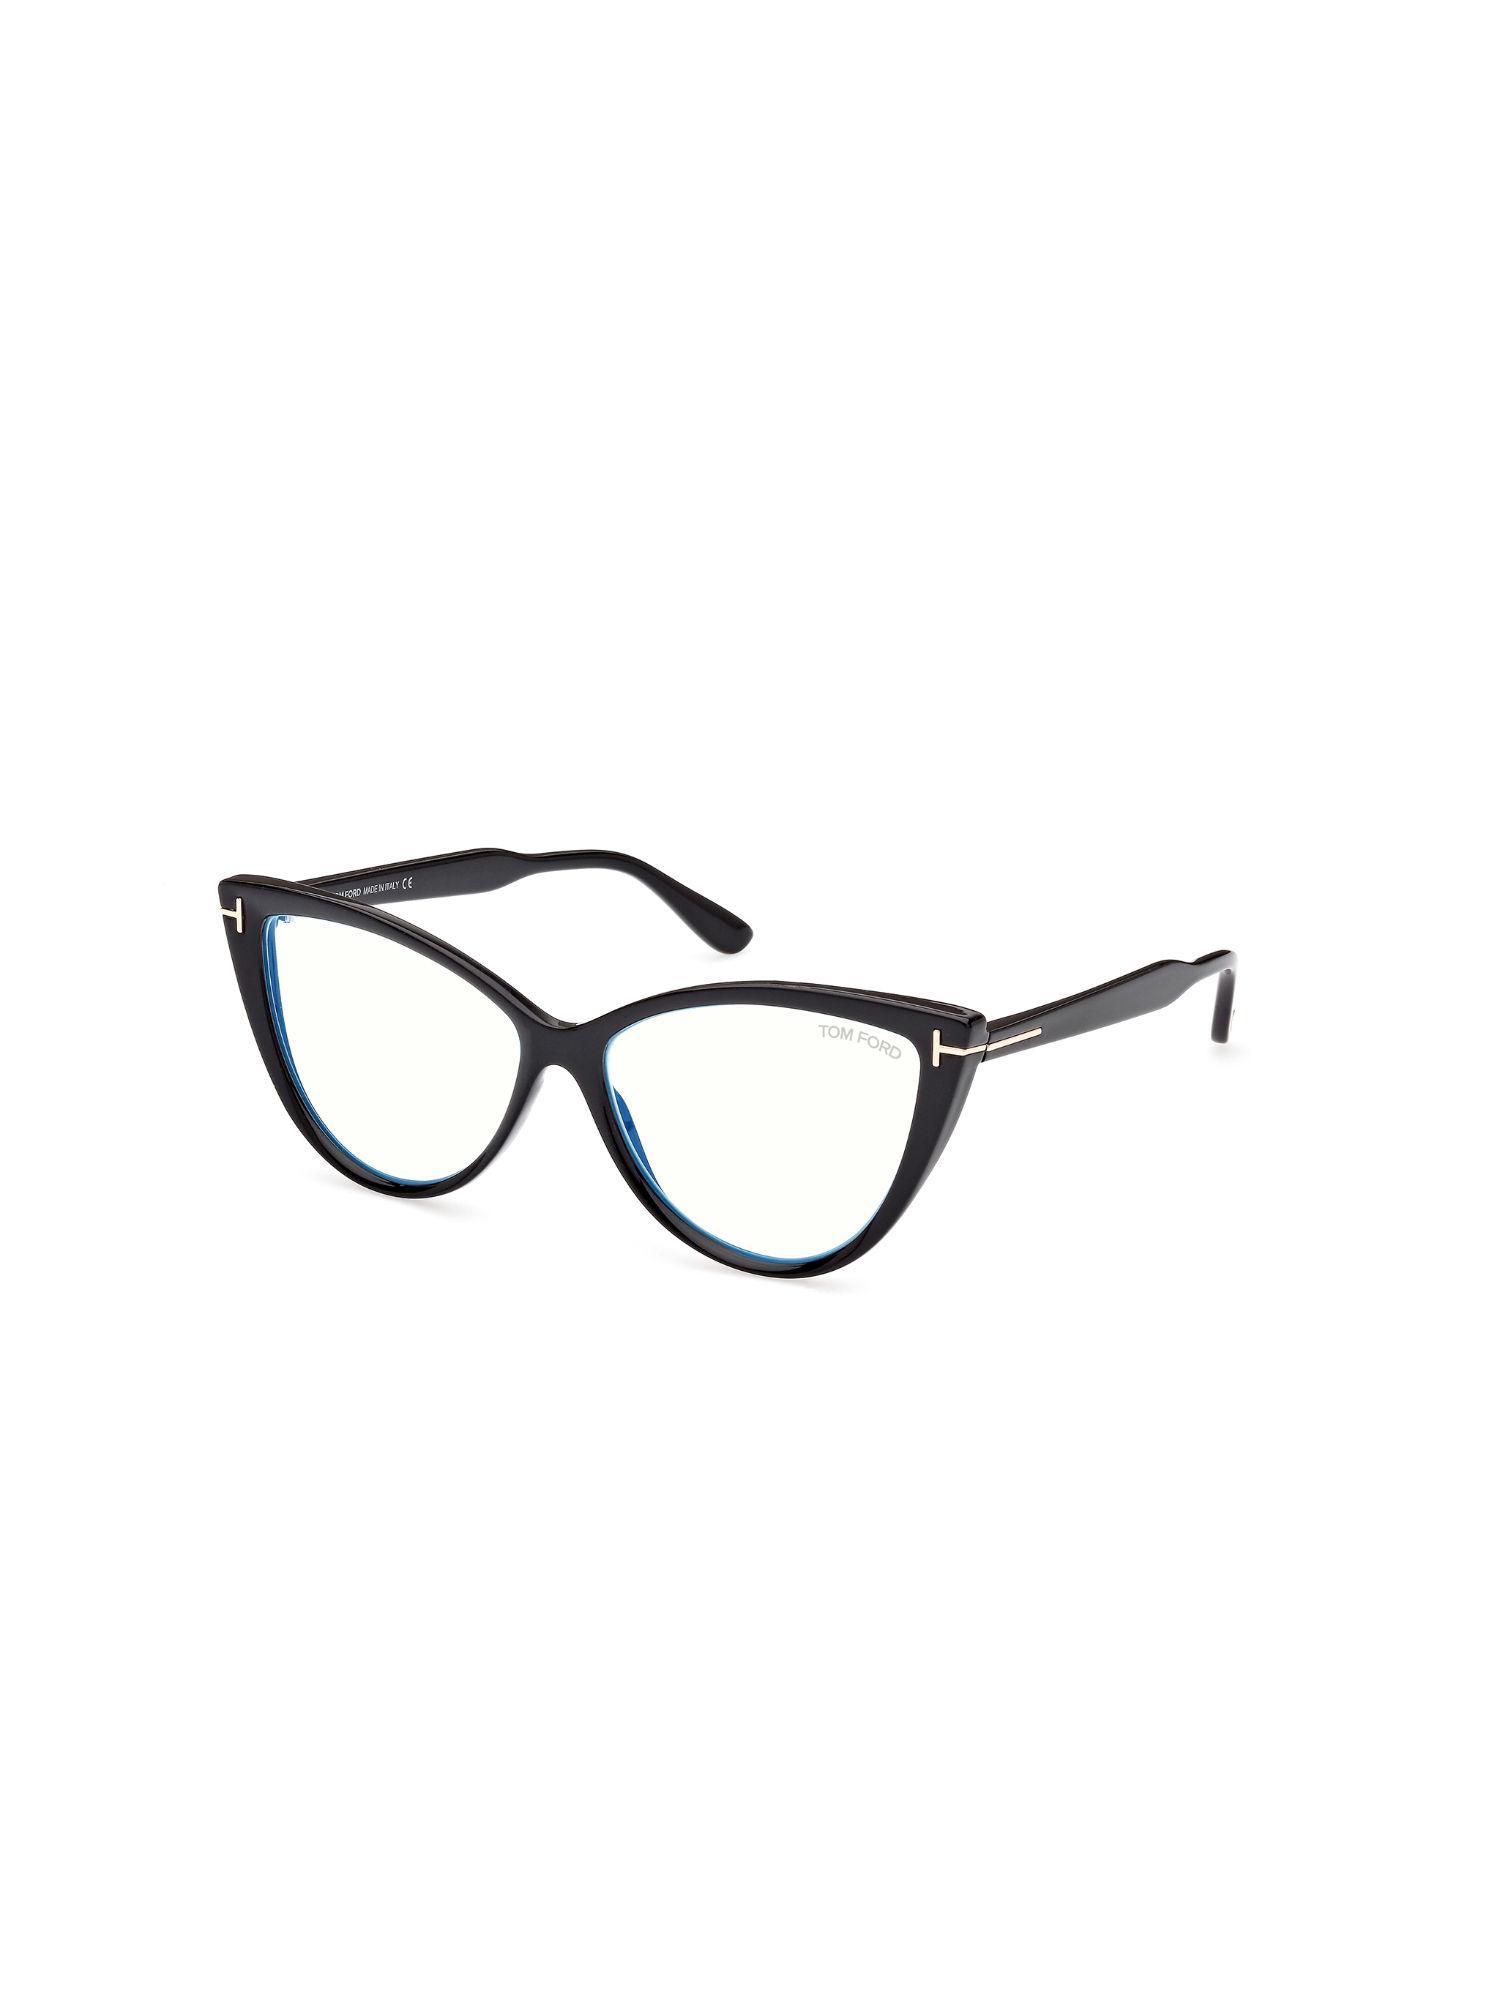 acetate black transparent eyeglass frame - ft5843-b 56 001